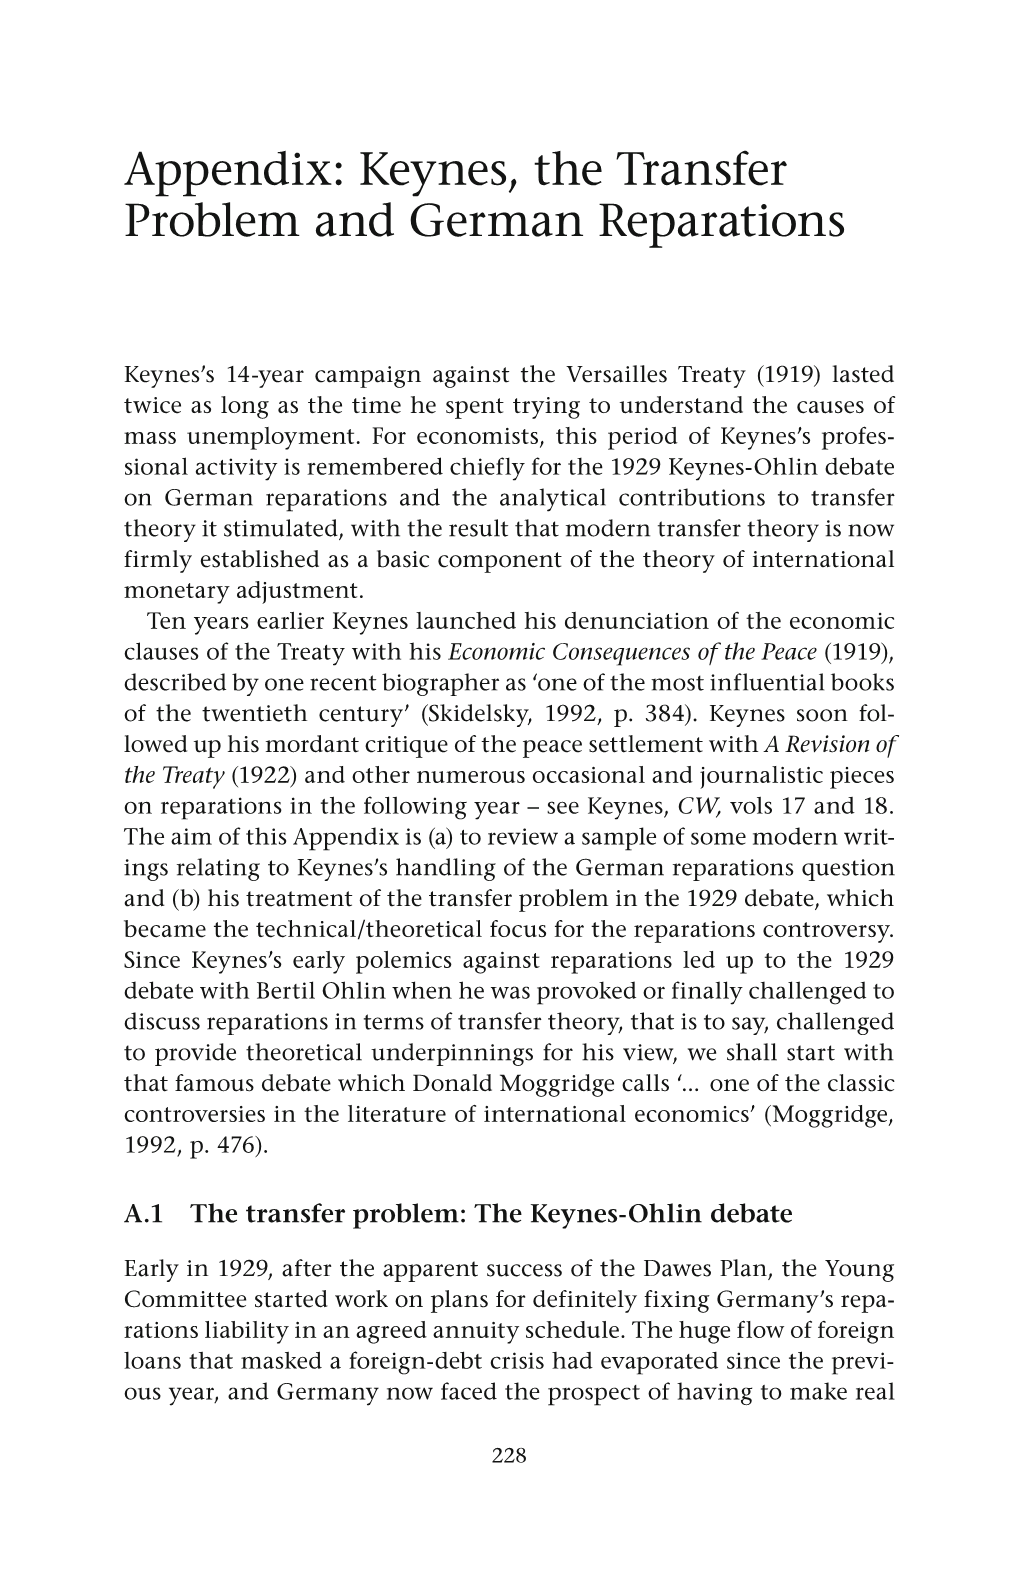 Appendix: Keynes, the Transfer Problem and German Reparations